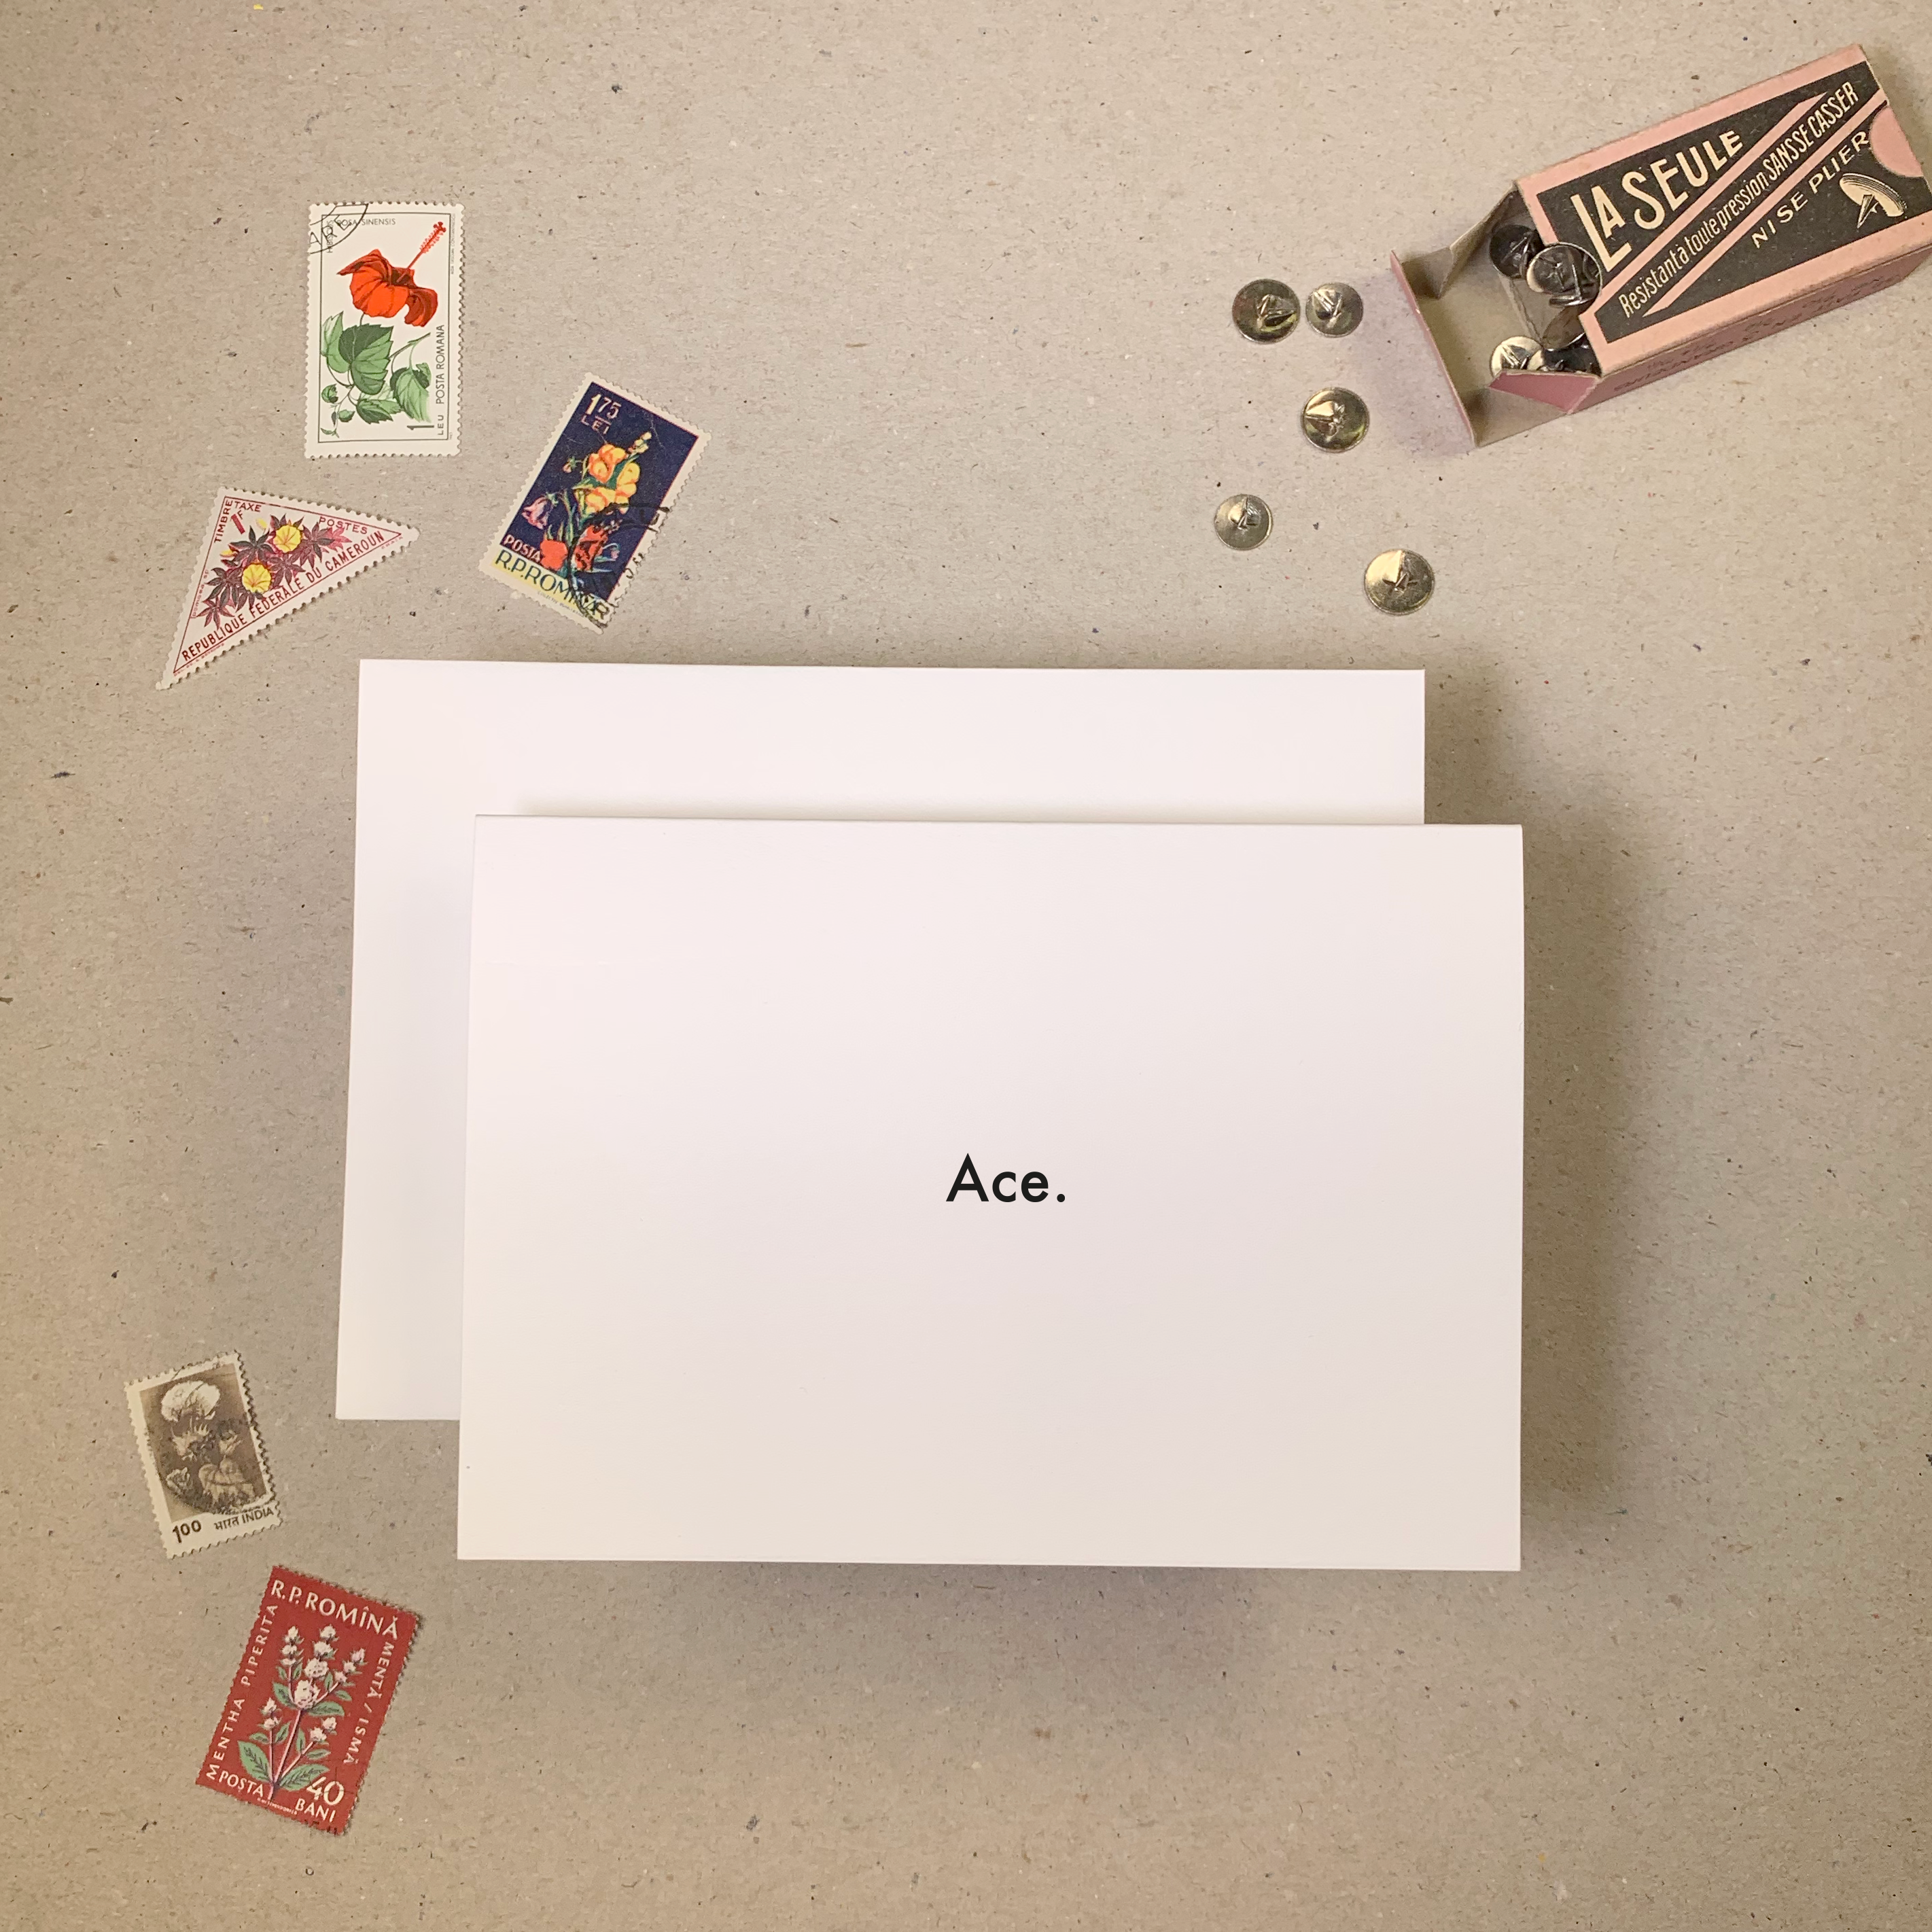 Ace greetings card